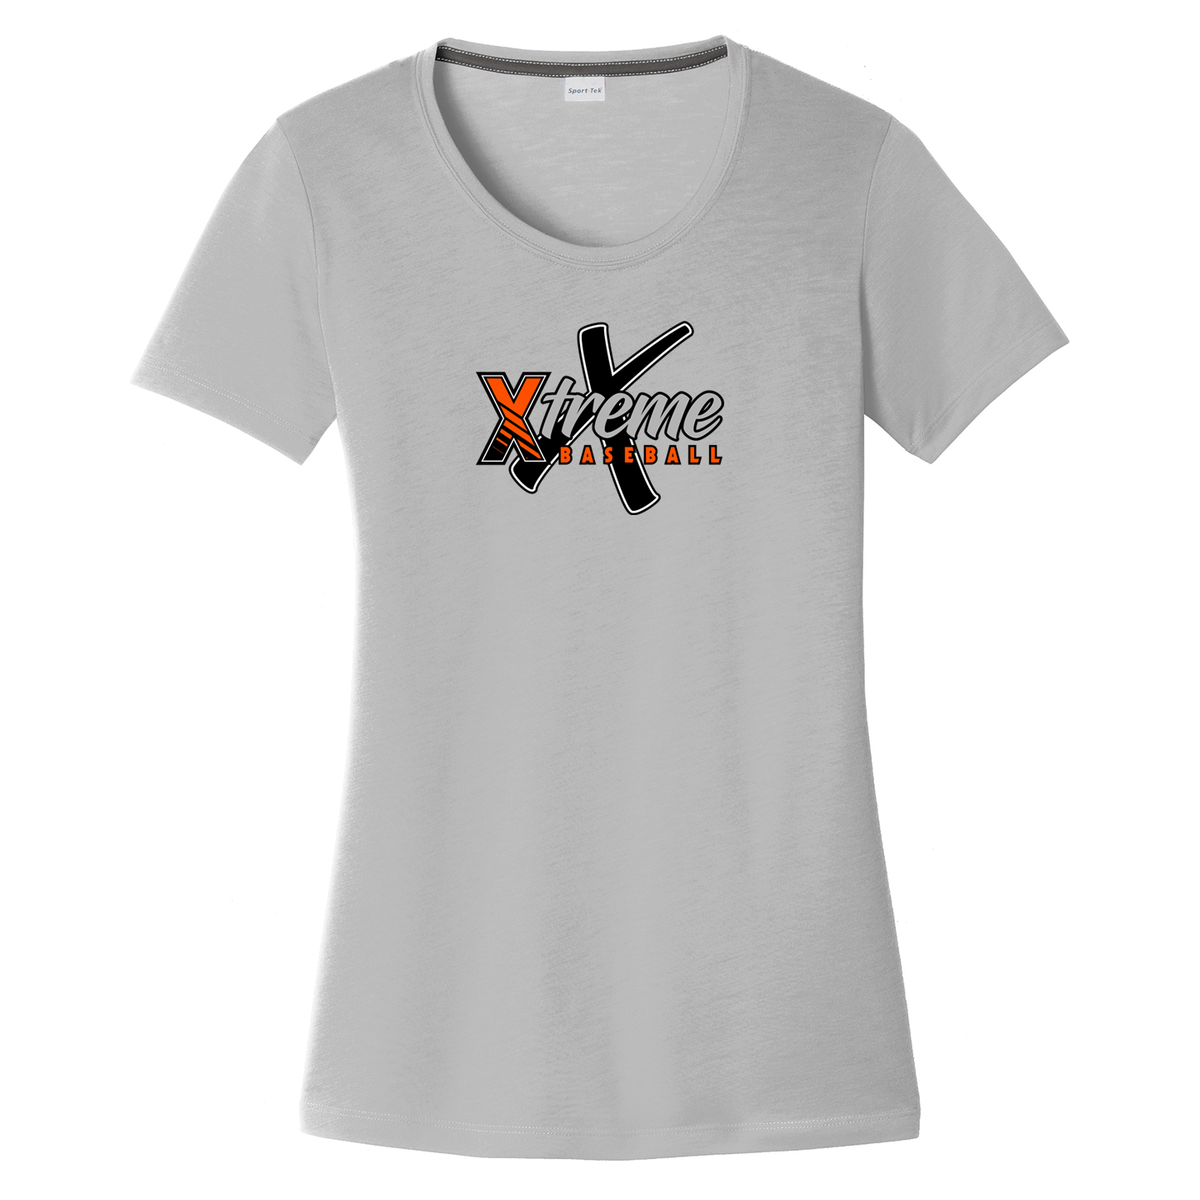 Xtreme Baseball Women's CottonTouch Performance T-Shirt